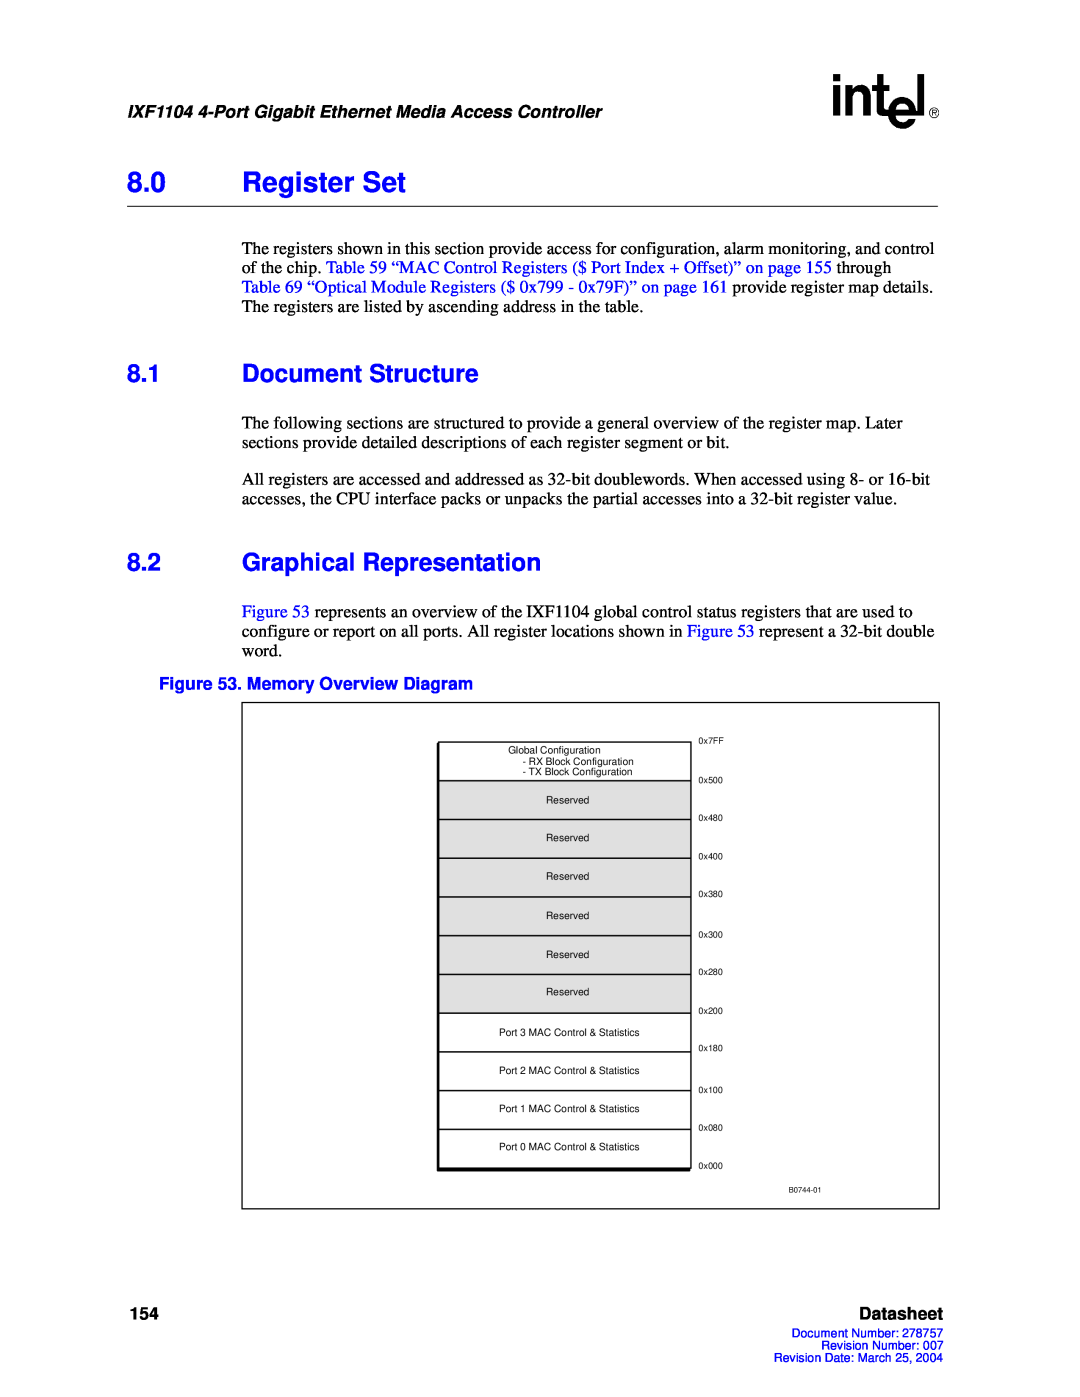 Intel IXF1104 manual 8.0Register Set, 8.1Document Structure, 8.2Graphical Representation, Datasheet 